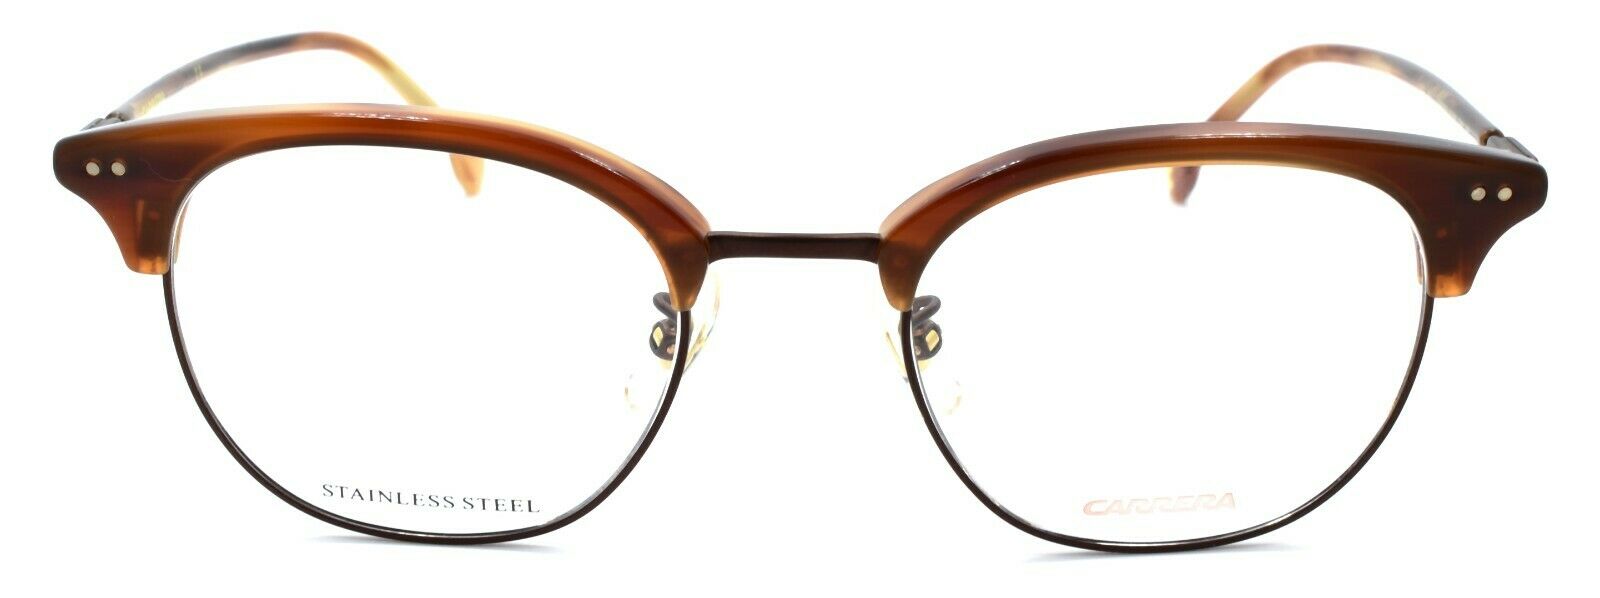 2-Carrera 161/V/F GMV Eyeglasses Frames 49-20-145 Brown Horn / Matte Brown-716736047782-IKSpecs